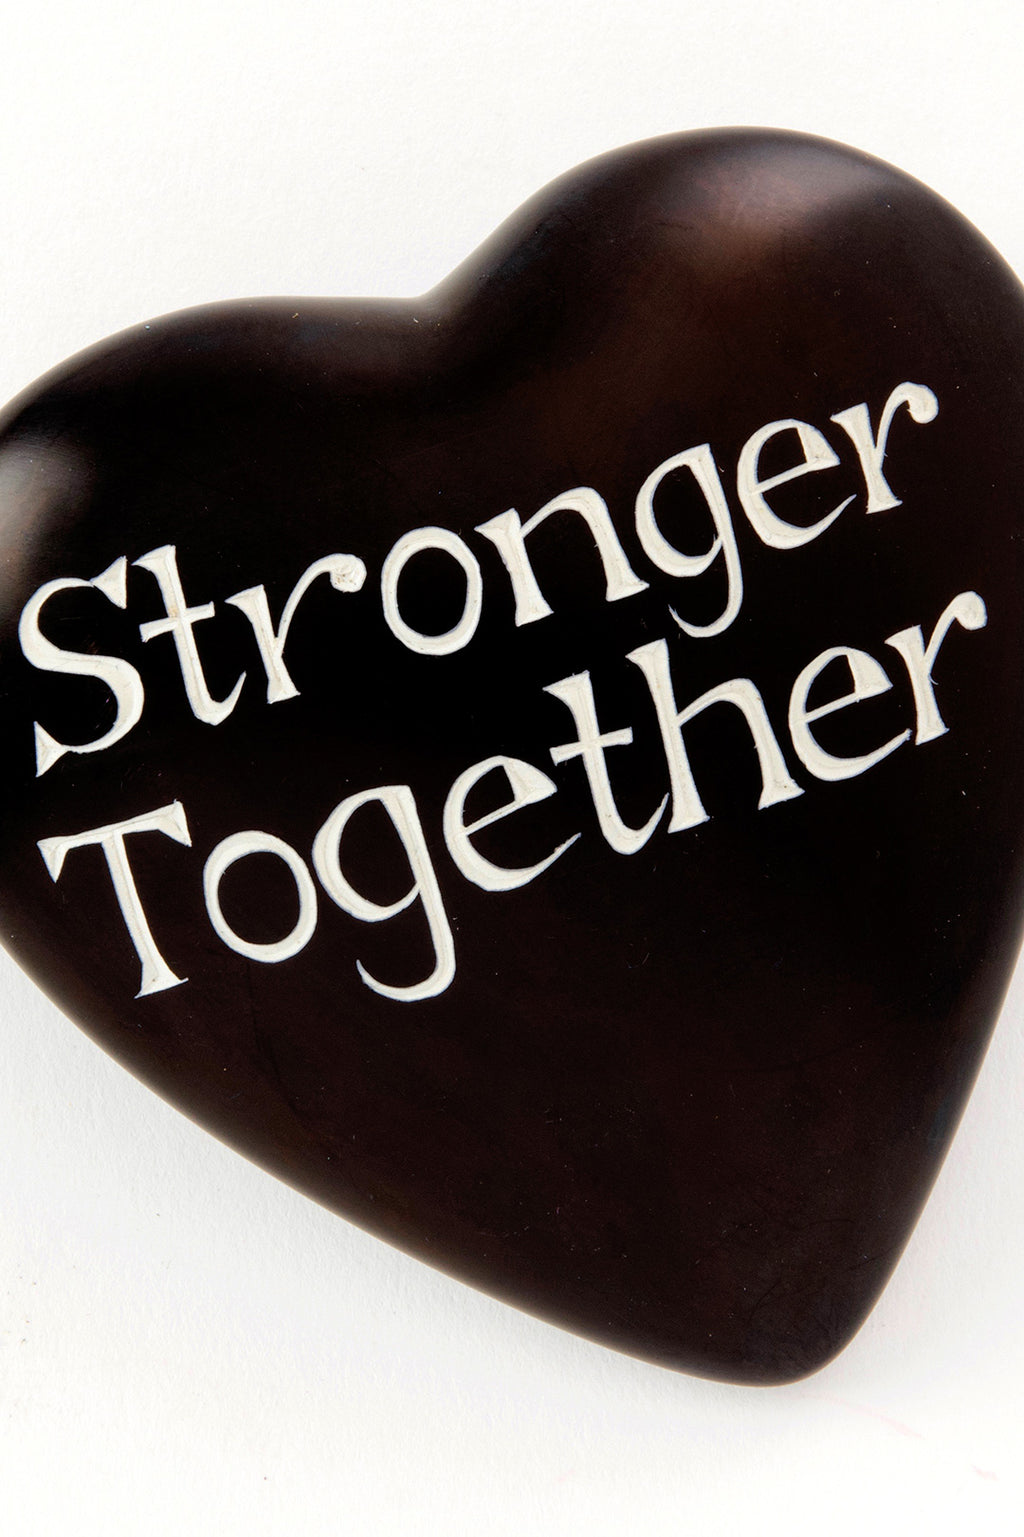 Wise Words Large Heart:  Stronger Together Default Title